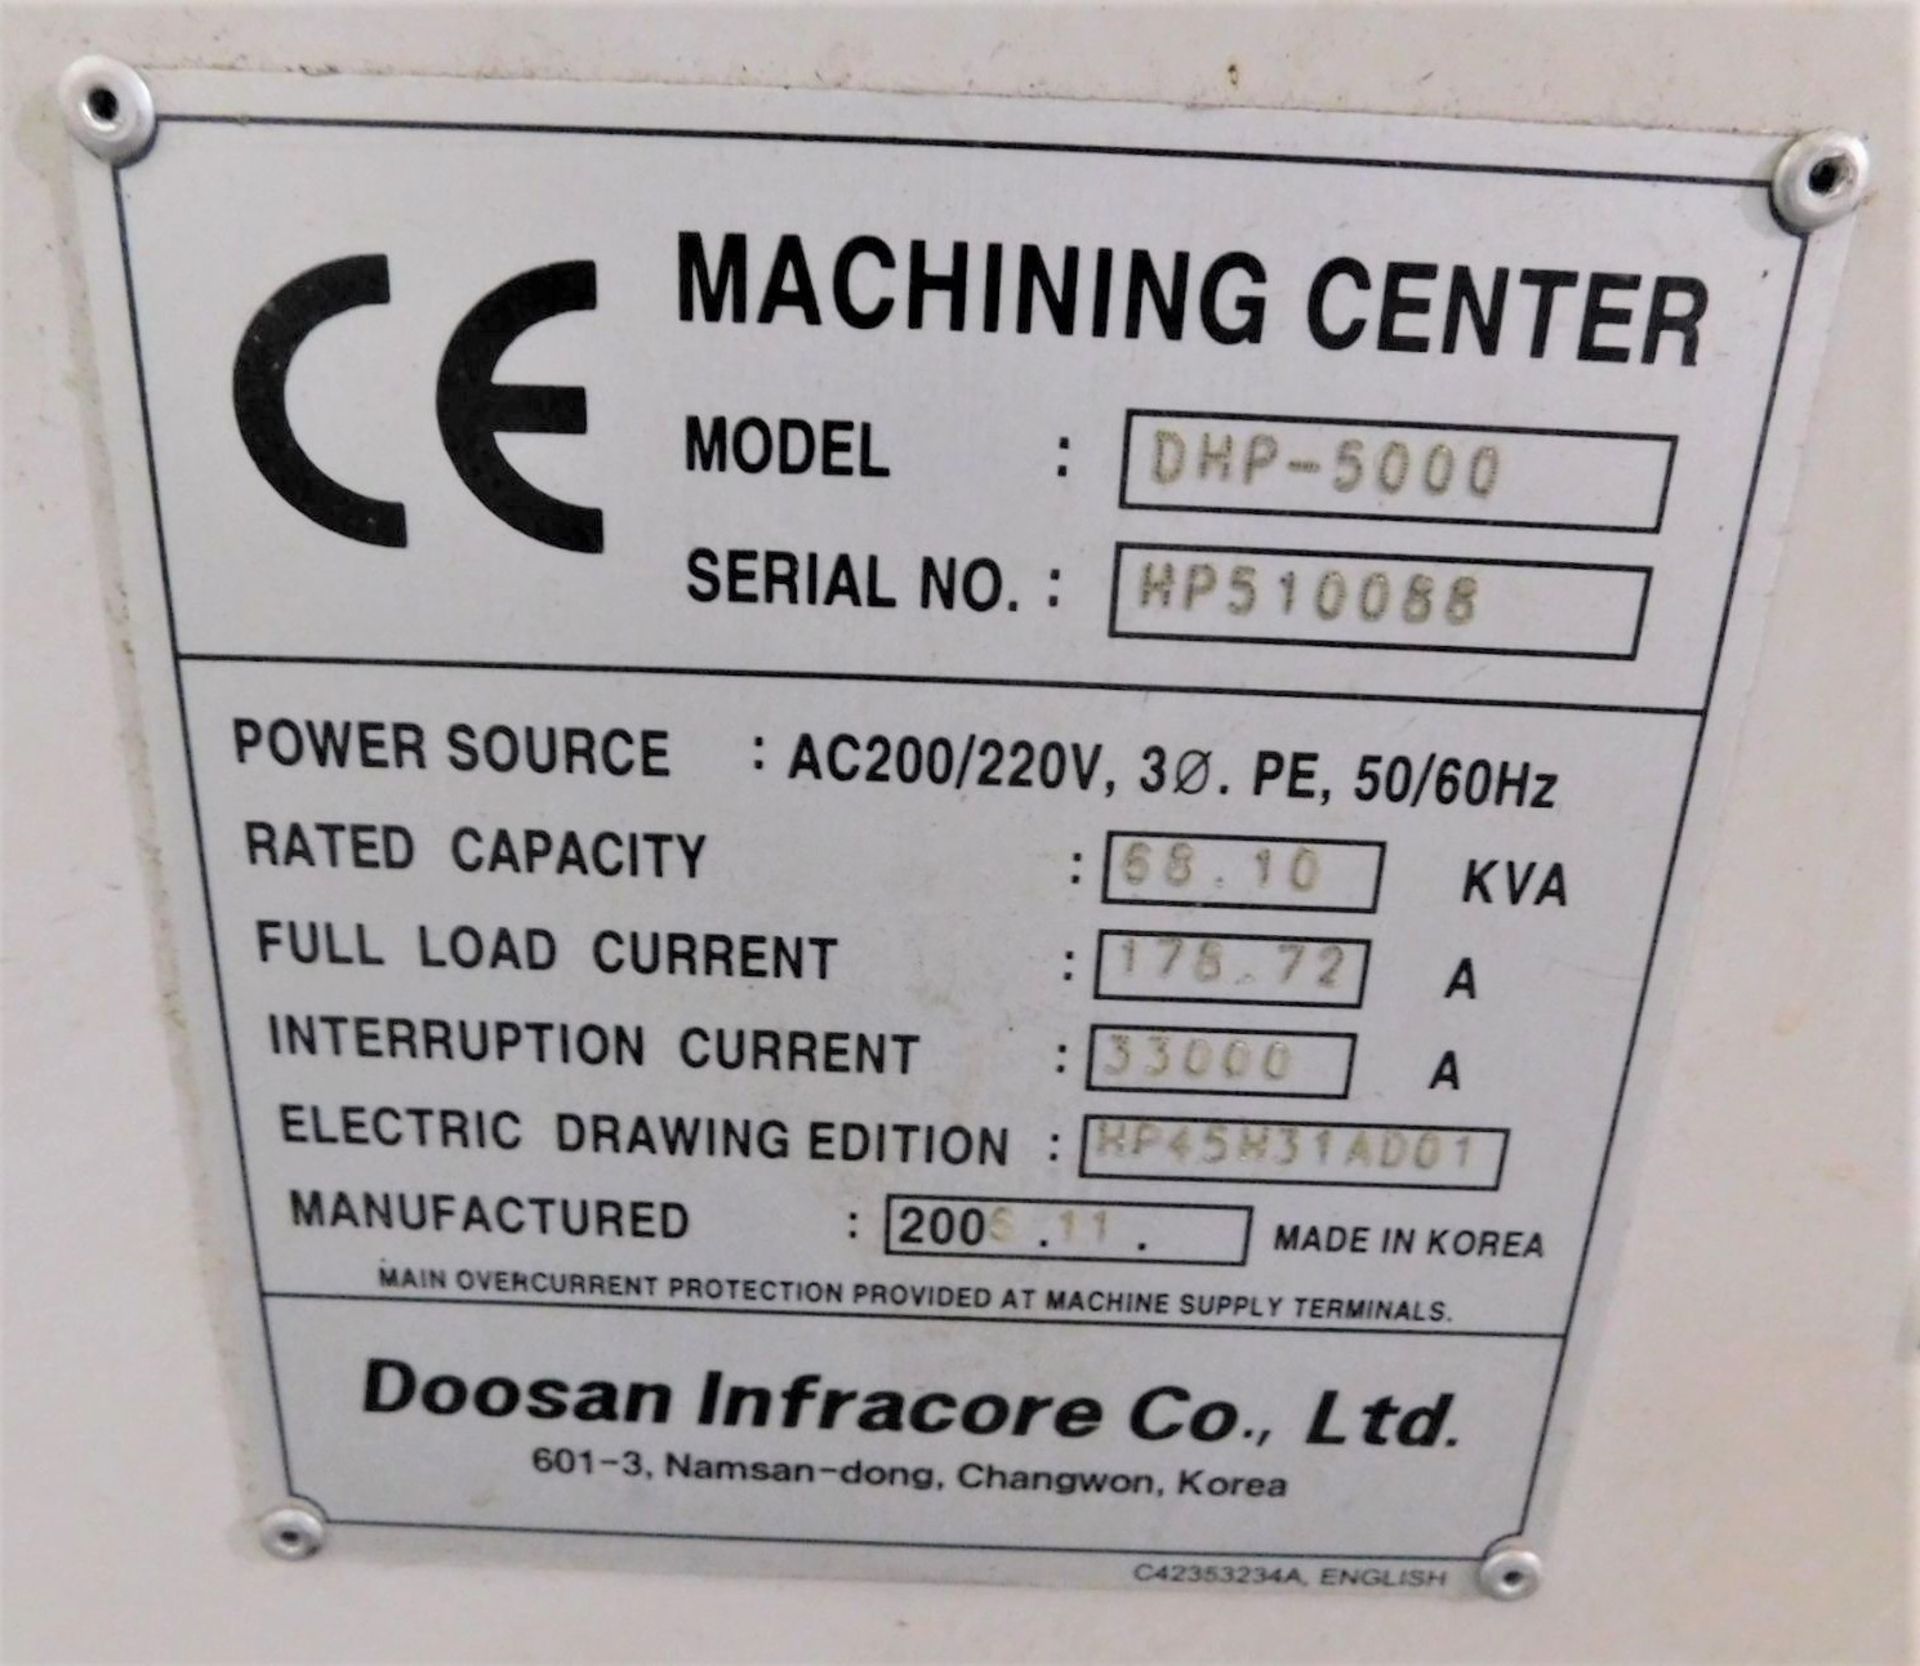 20"x20" DOOSAN DHP-5000 CNC 4-AXIS HORIZONTAL MACHINING CENTER, S/N HP510088, NEW 2006 - Image 10 of 20